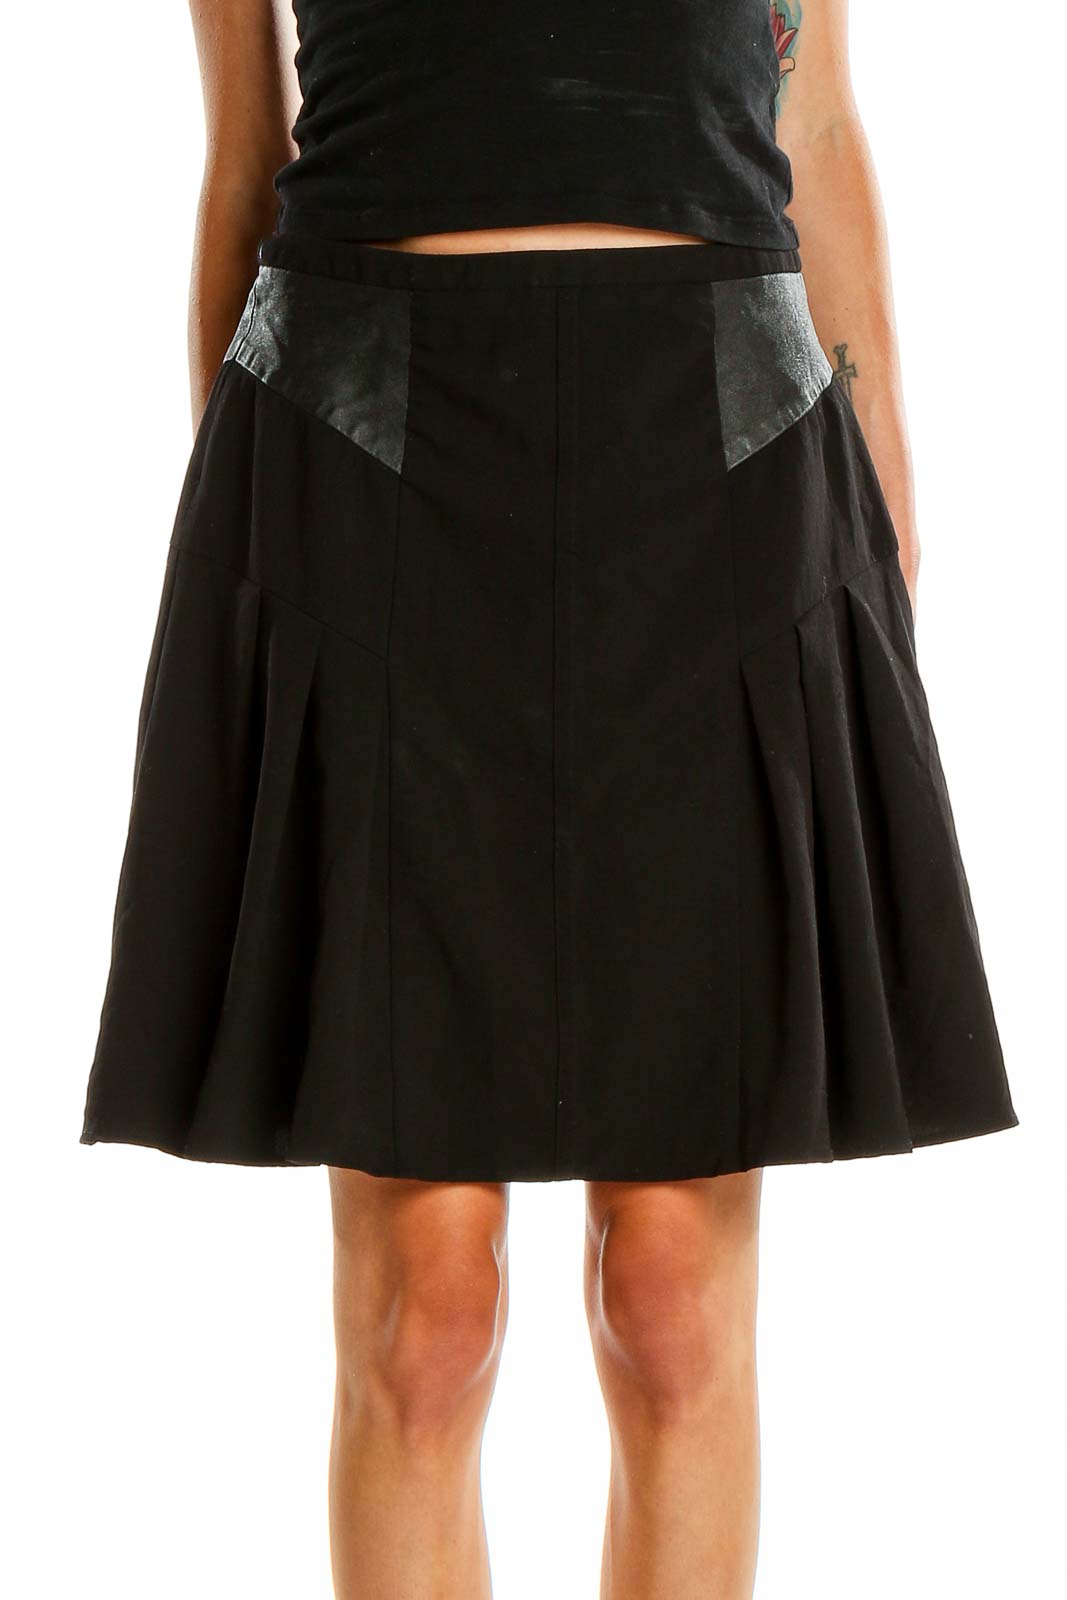 Black Chic Flared Skirt Front